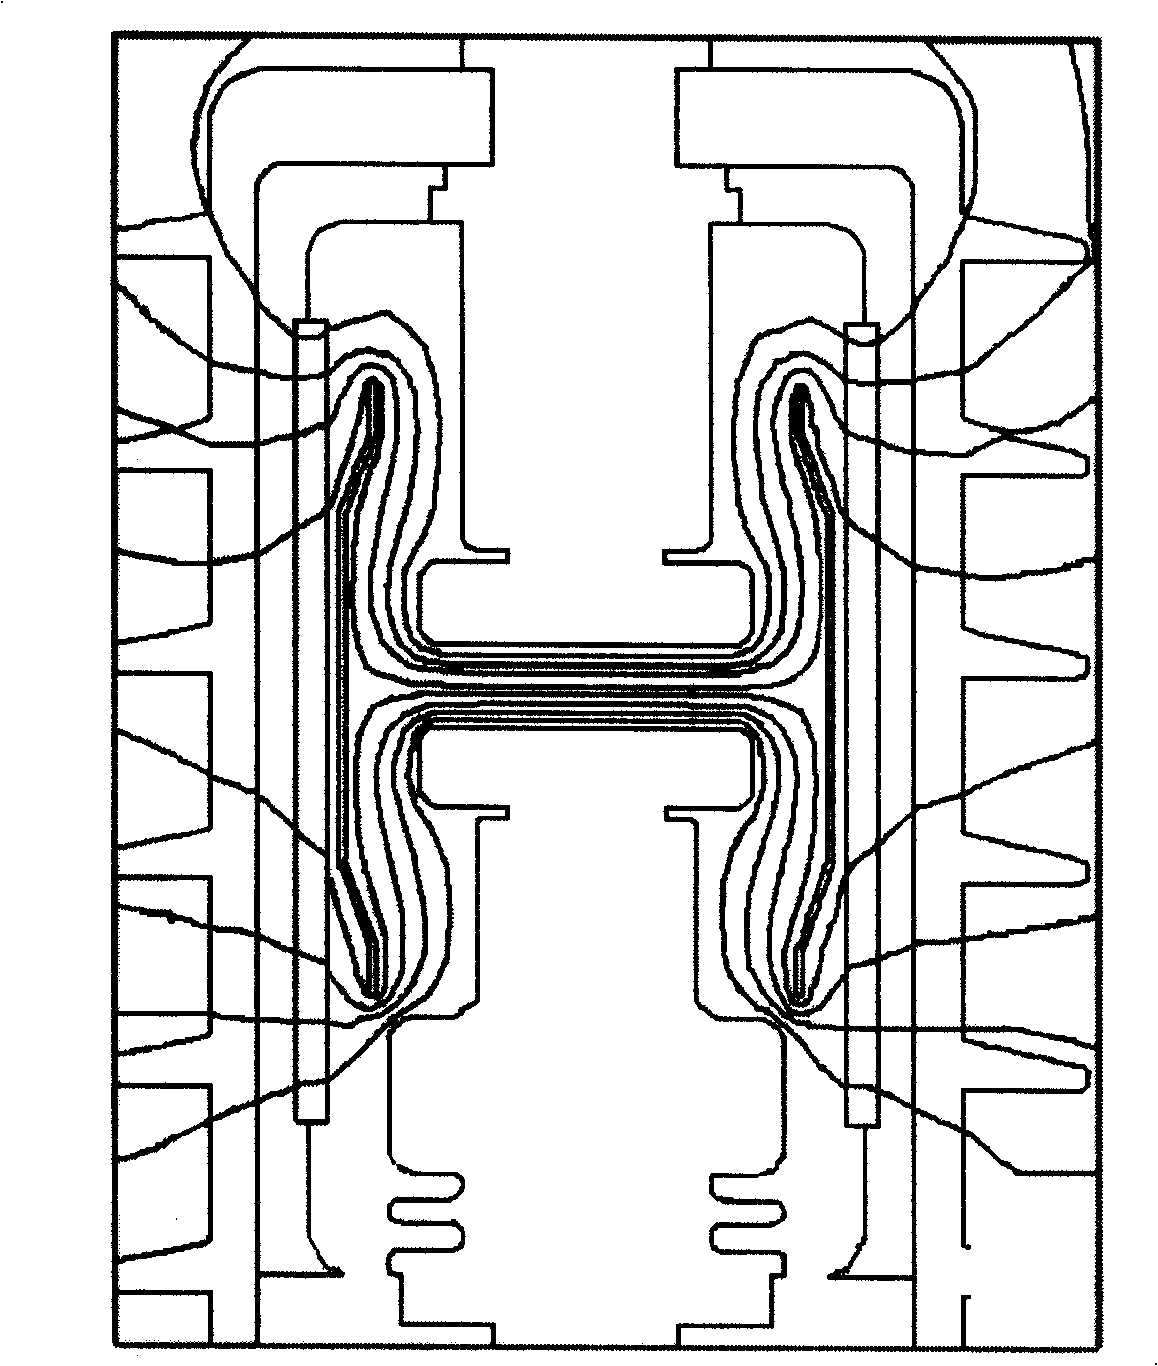 Vacuum circuit breaker on 24kV outdoor column